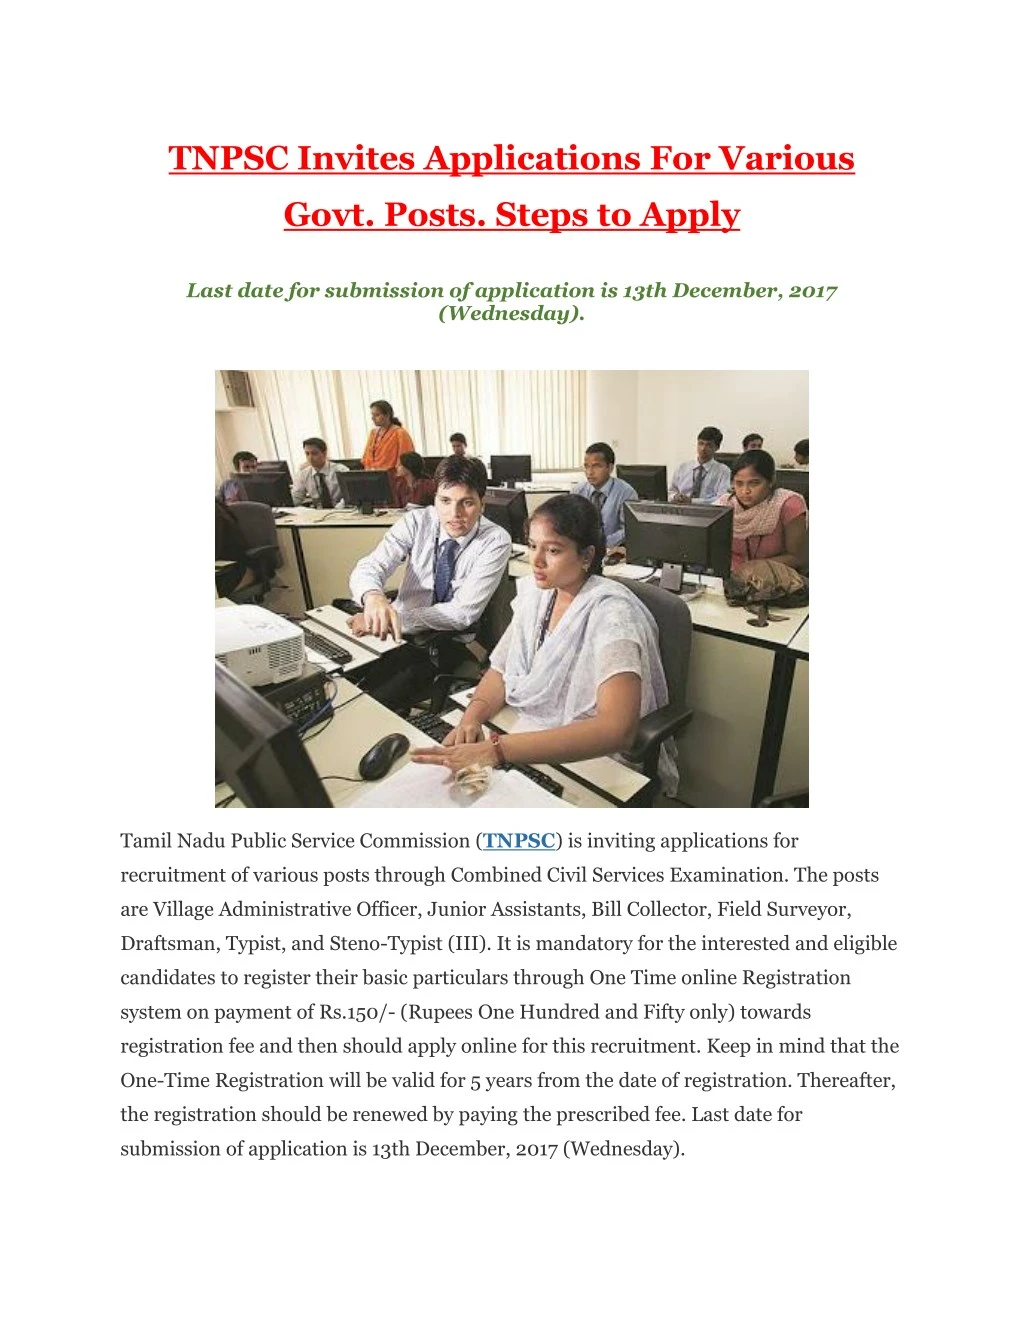 tnpsc invites applications for various